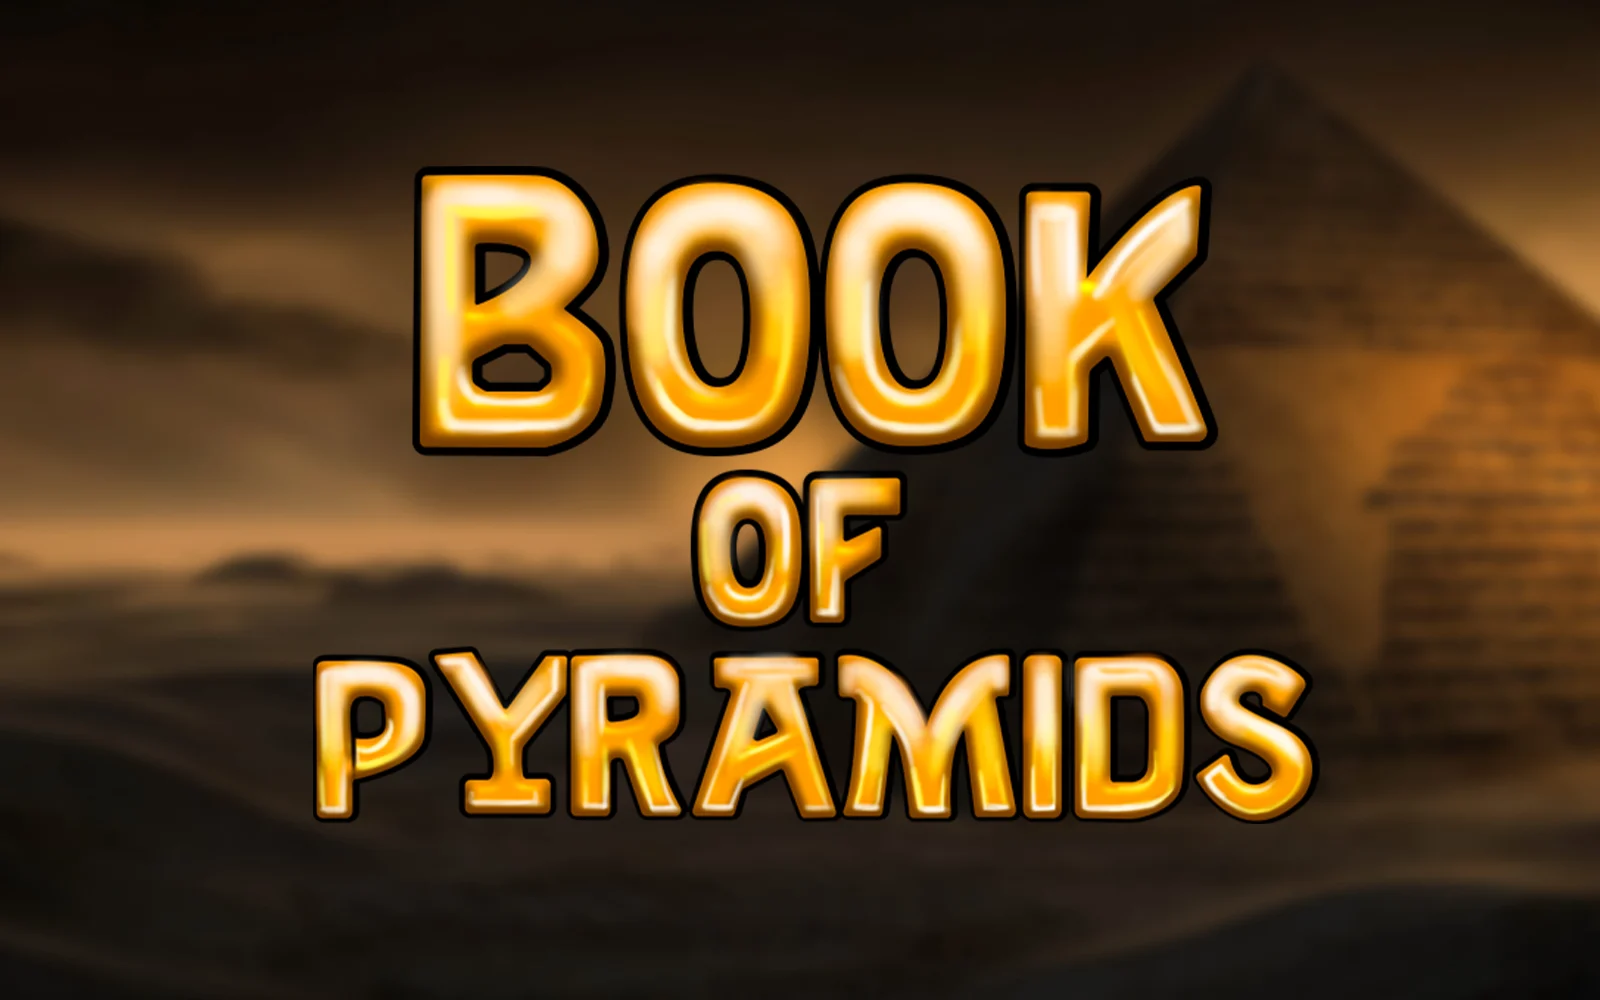 Starcasino.be online casino üzerinden Book of Pyramids oynayın